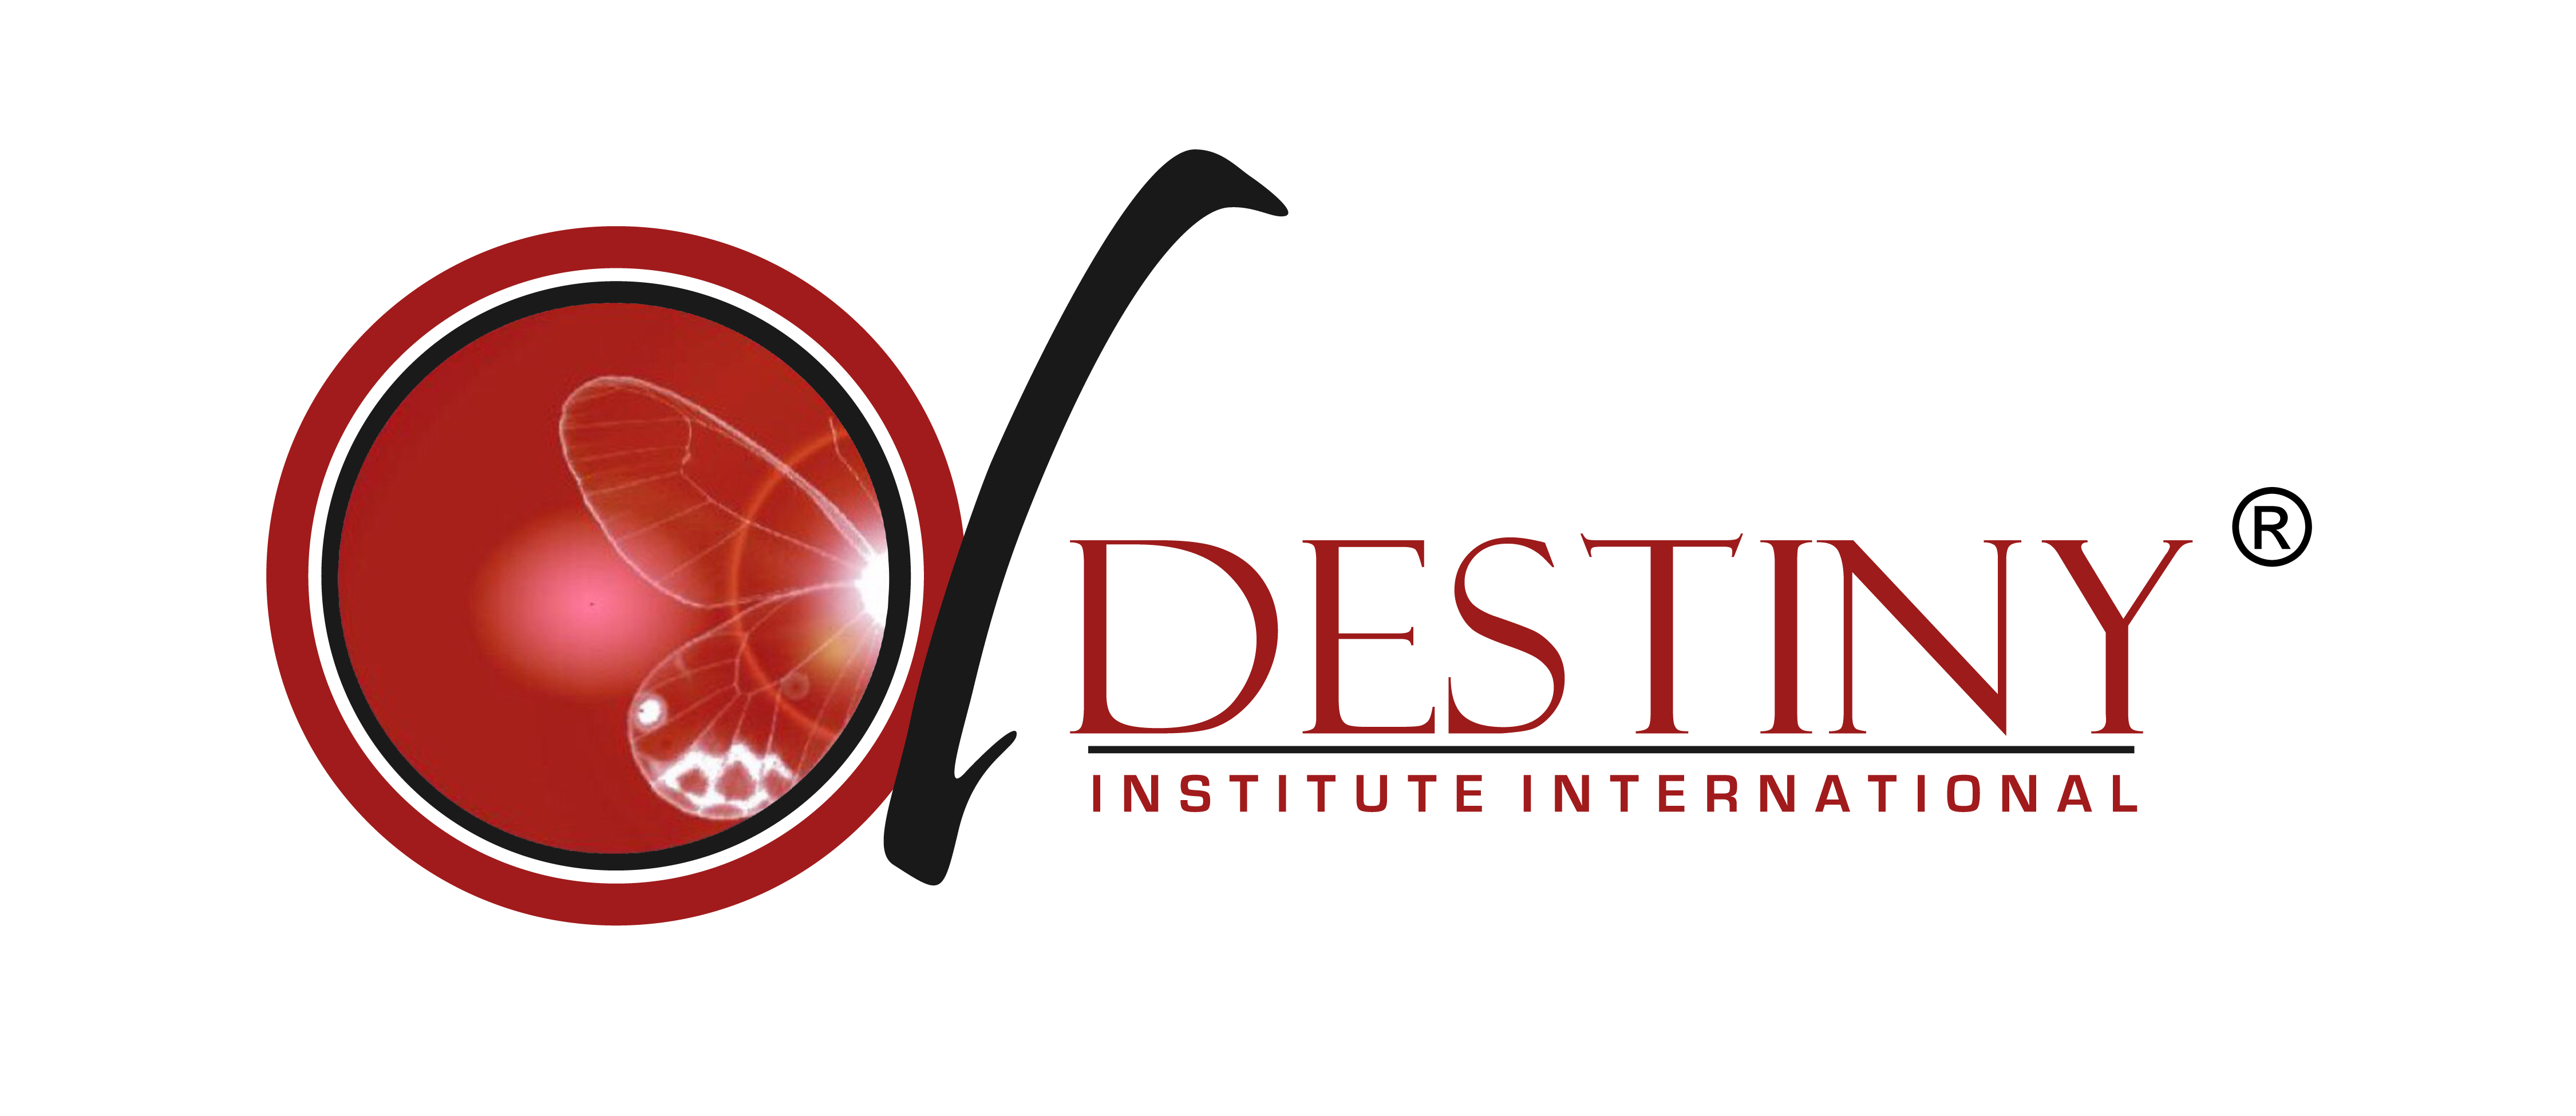 Destiny Institute International logo